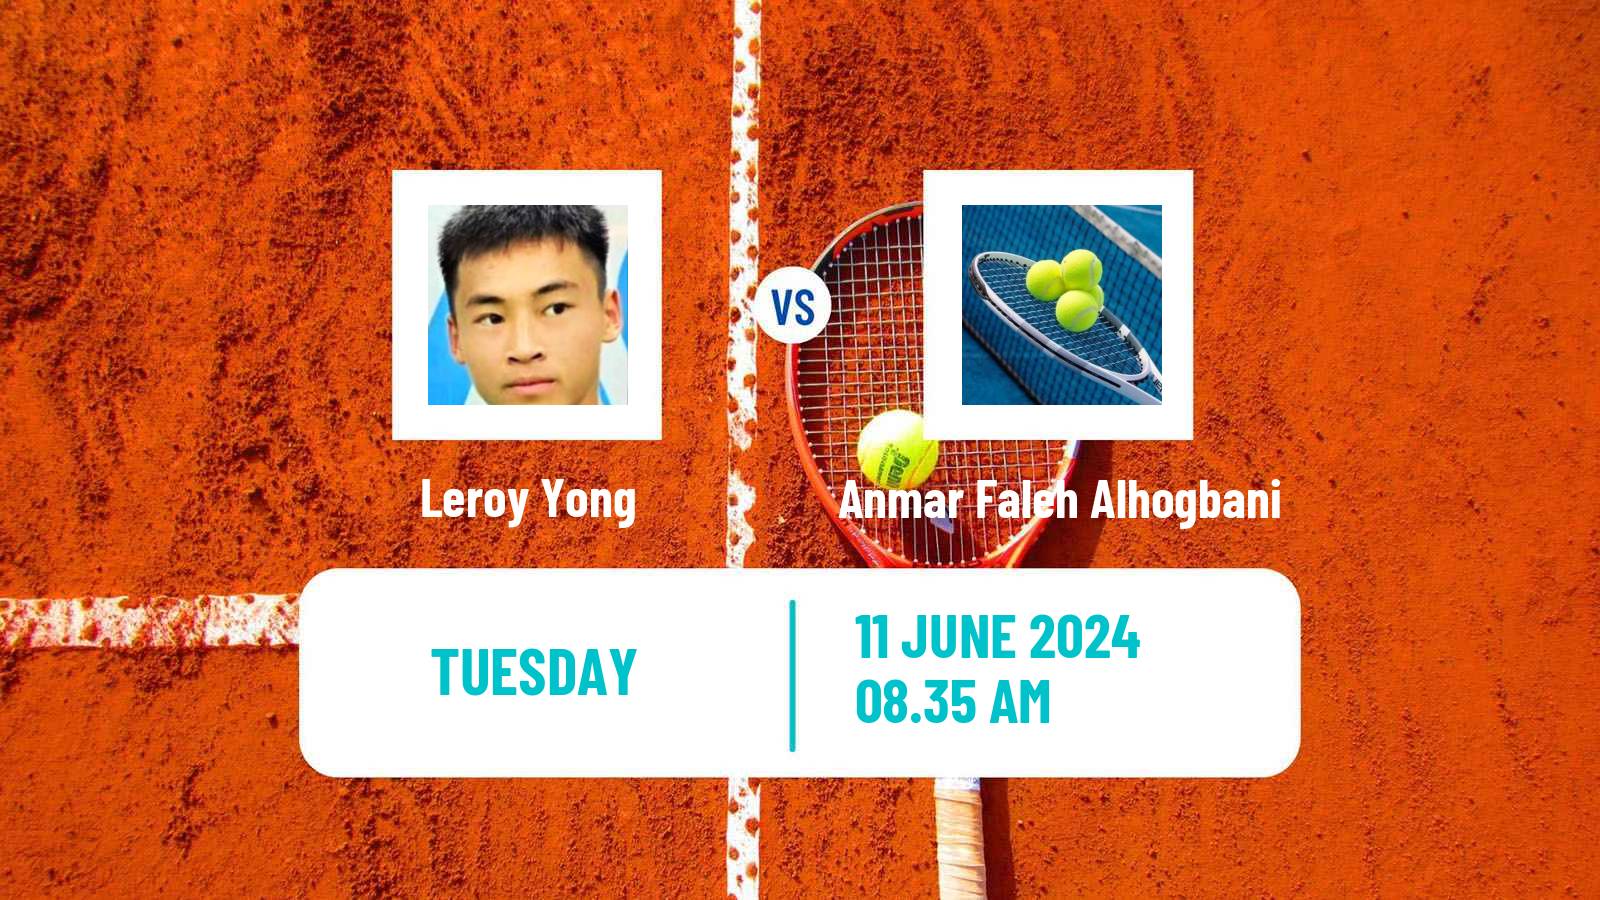 Tennis Davis Cup Group III Leroy Yong - Anmar Faleh Alhogbani